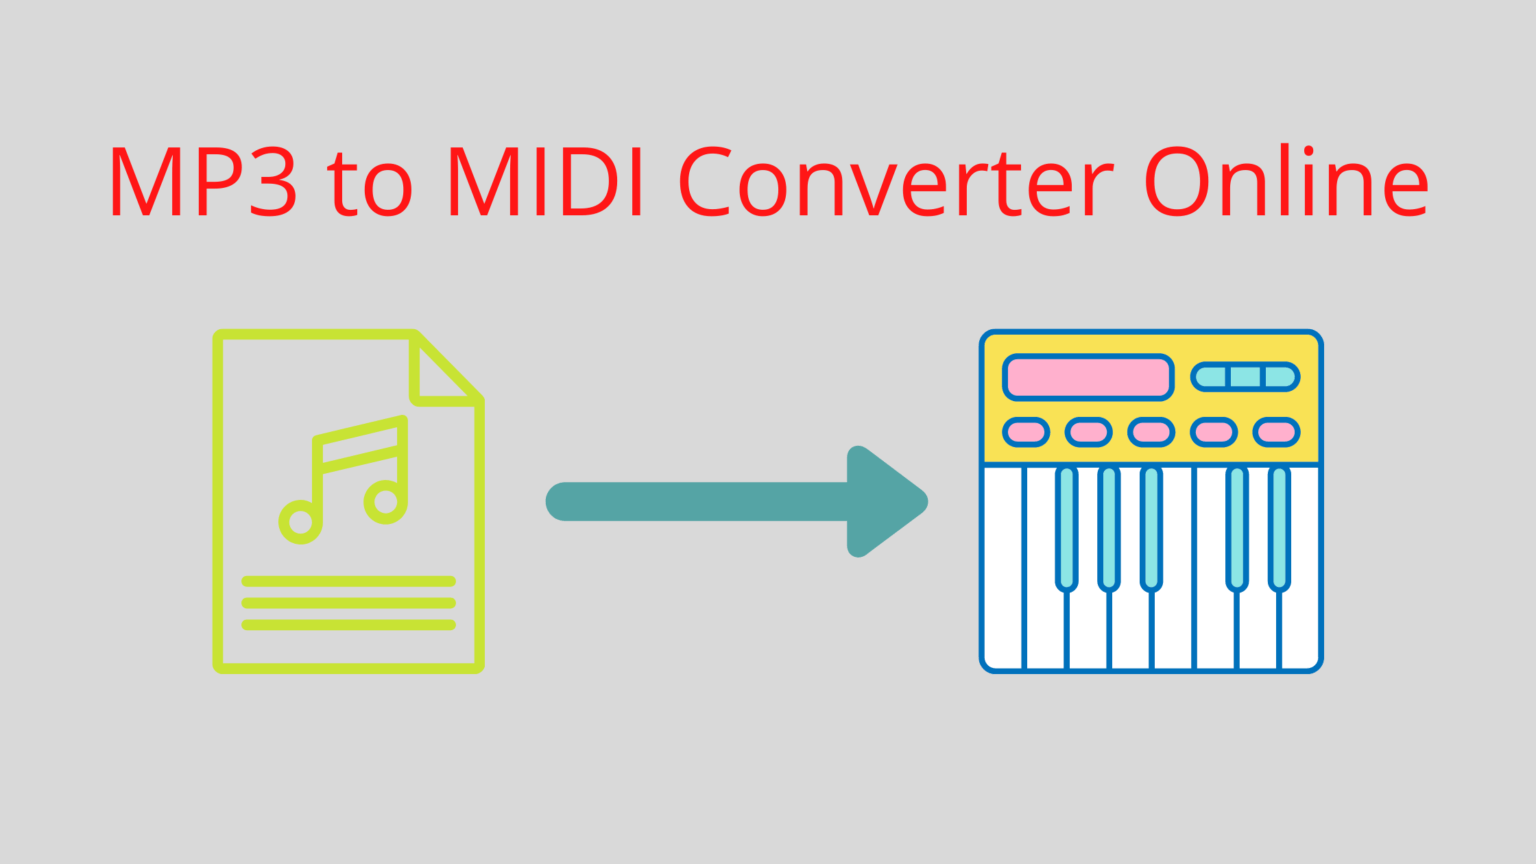 midi to mp3 converter free